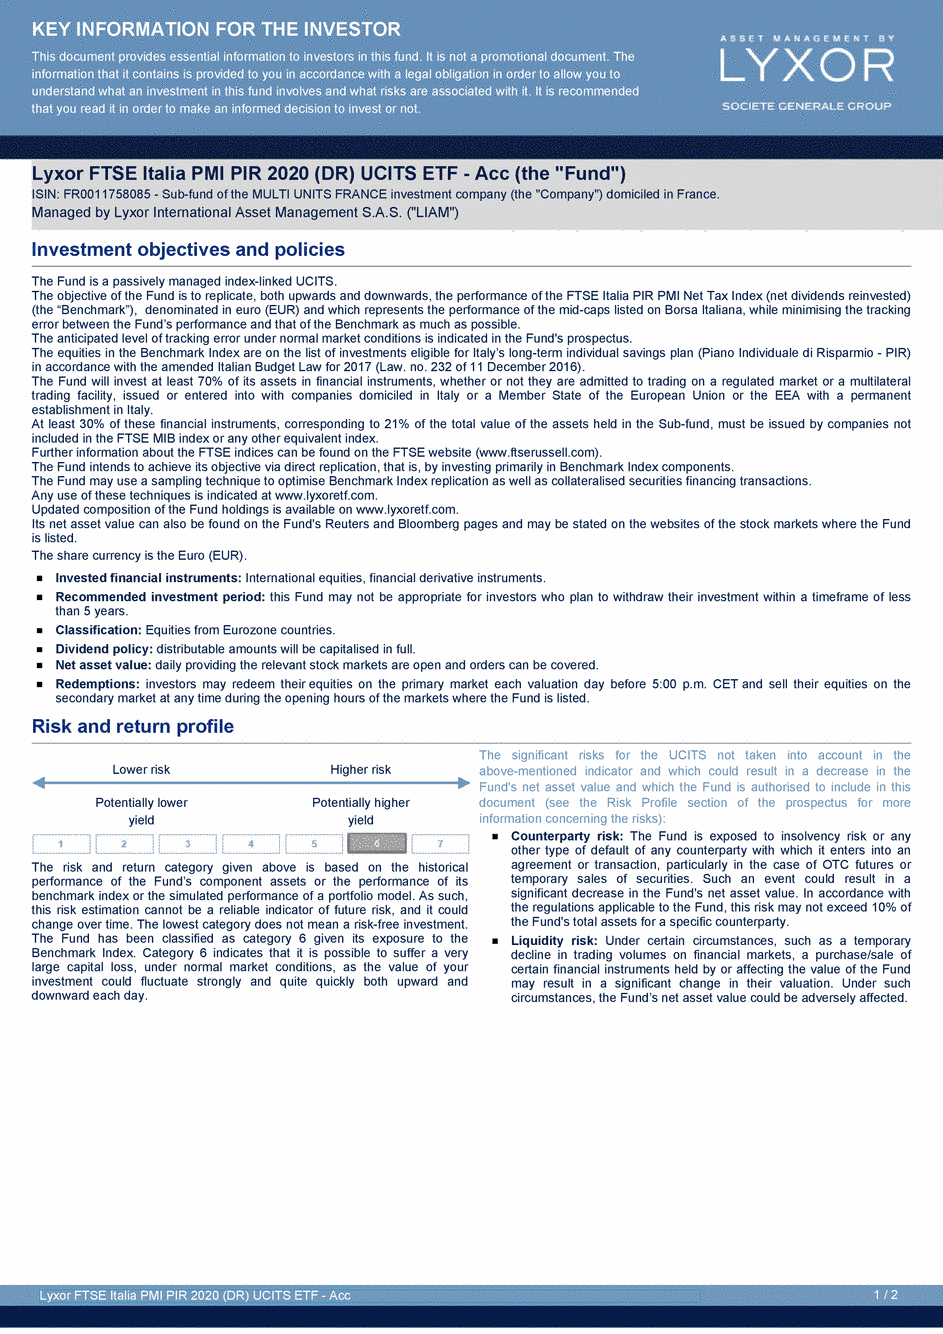 DICI Lyxor FTSE Italia PMI PIR 2020 (DR) UCITS ETF - Acc - 30/03/2020 - Anglais